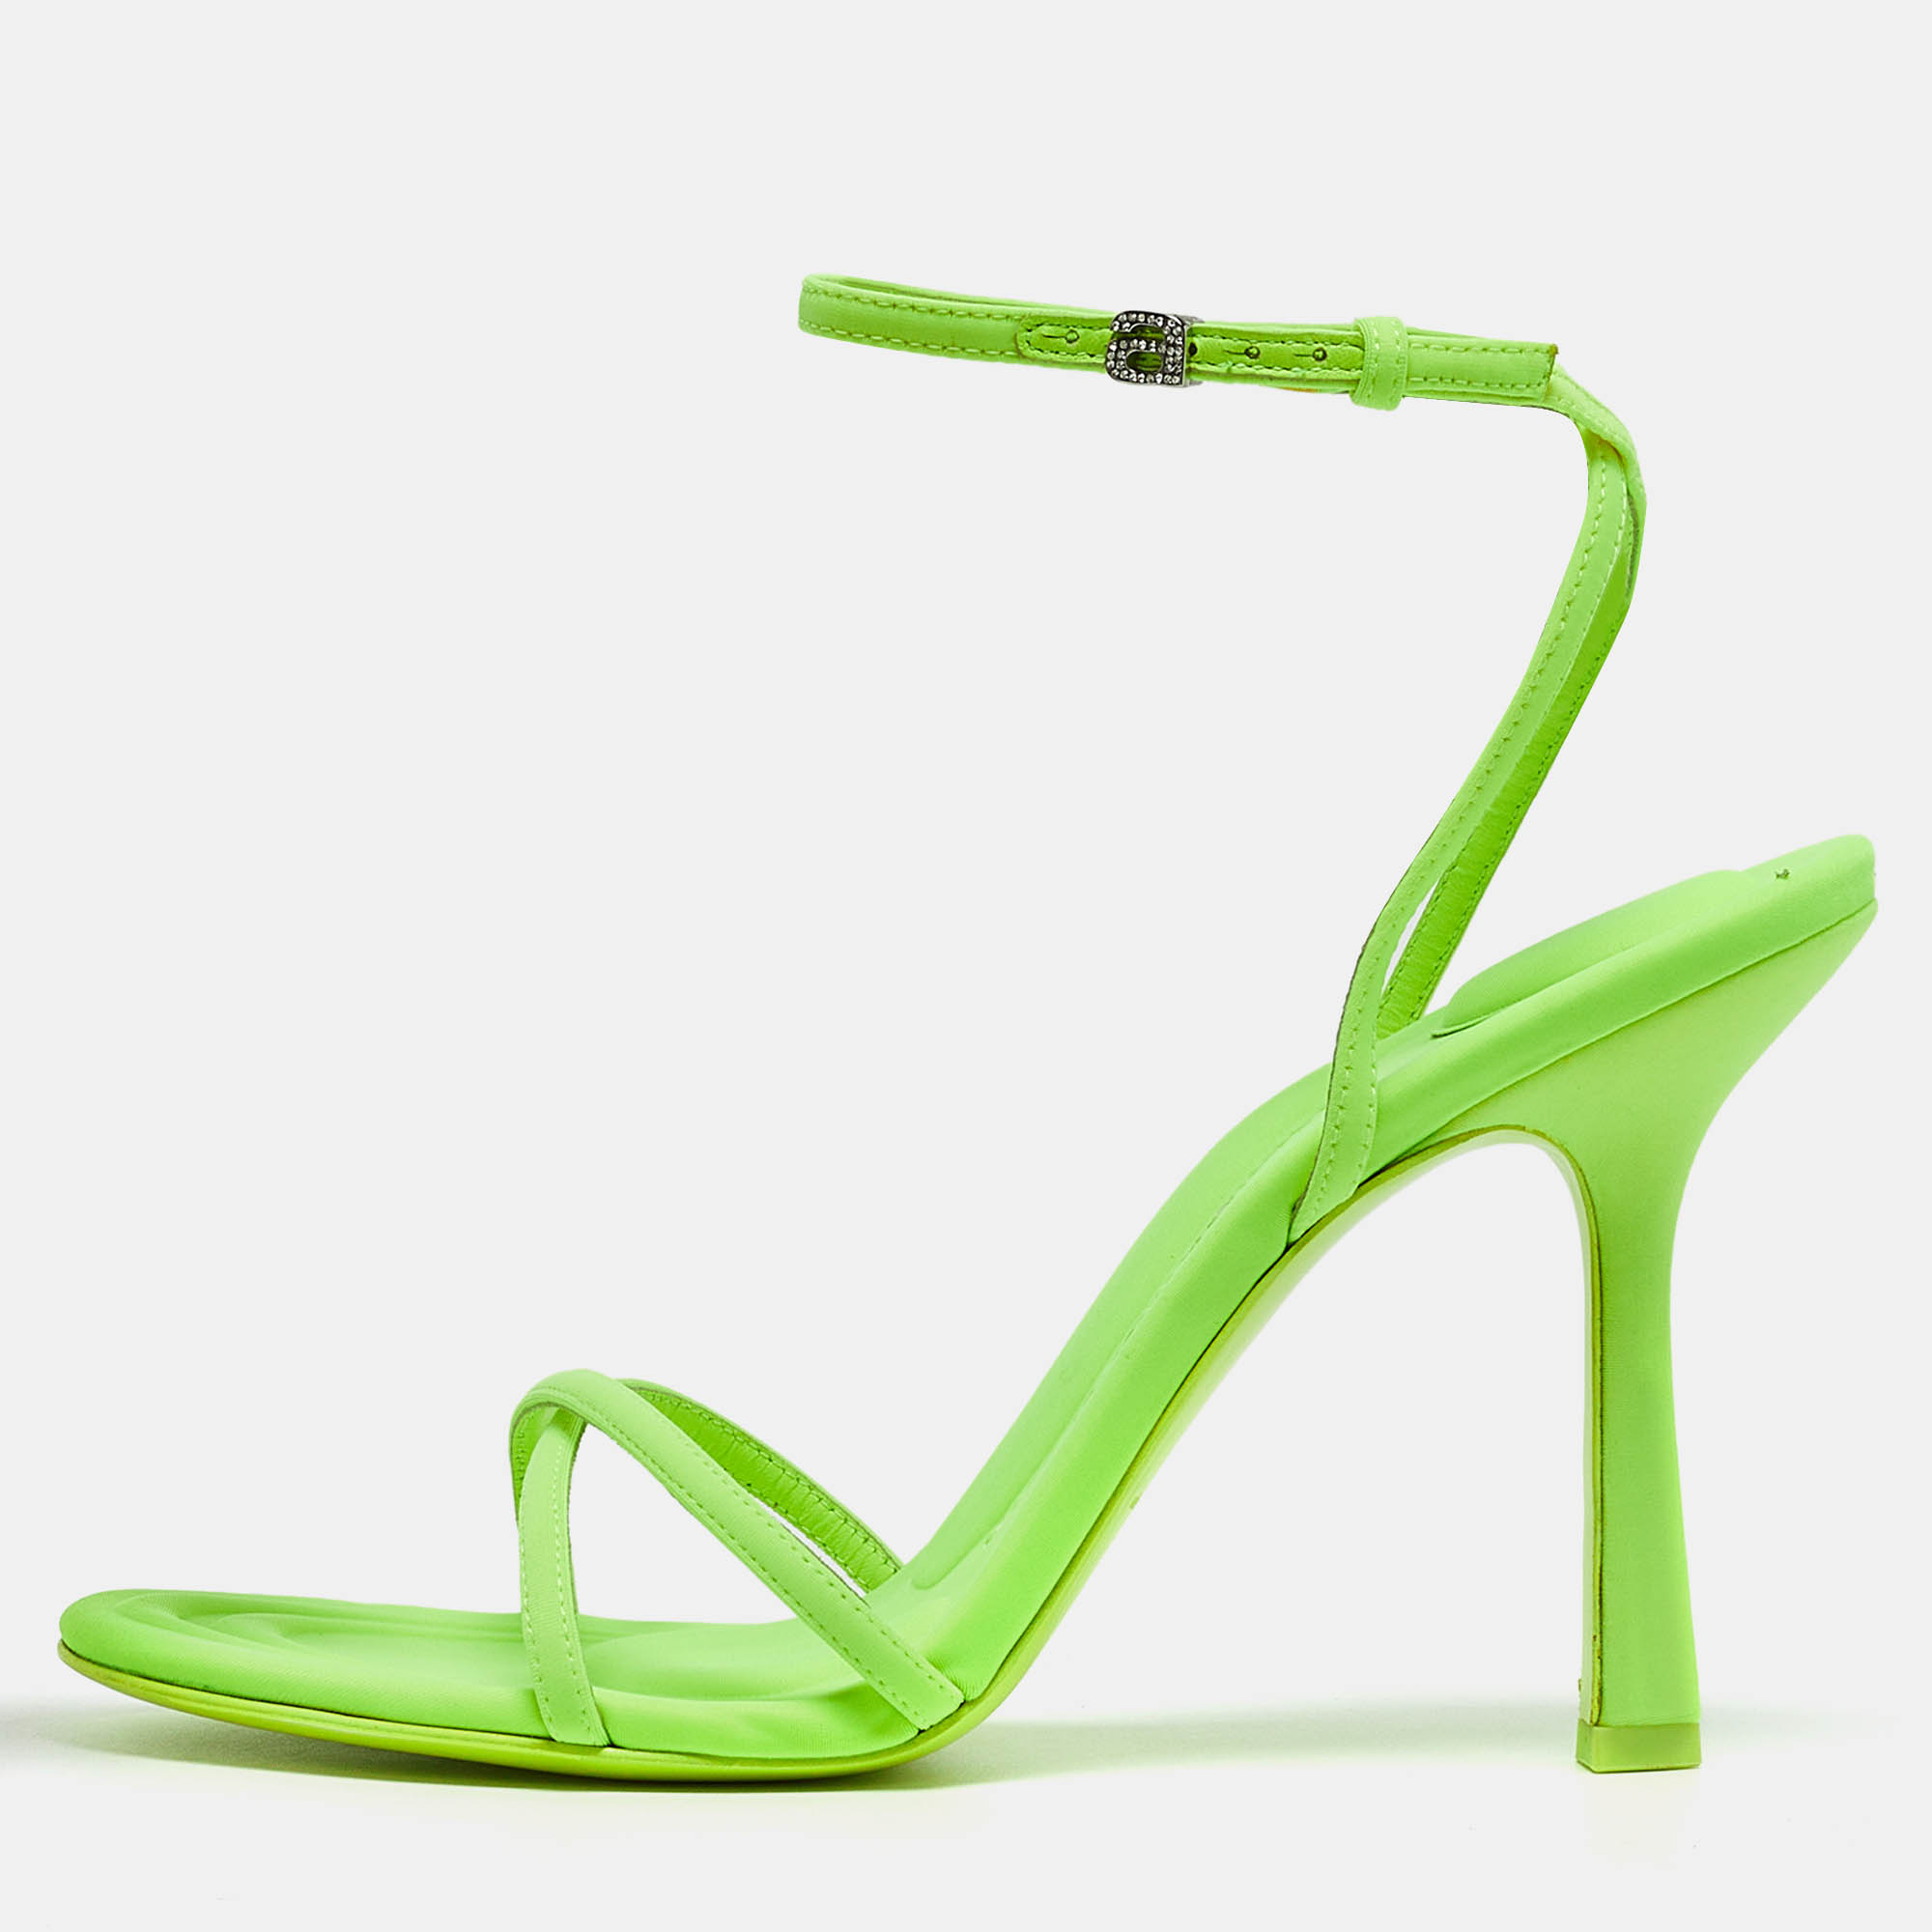 Alexander wang neon green neoprene dahlia sandals size 40